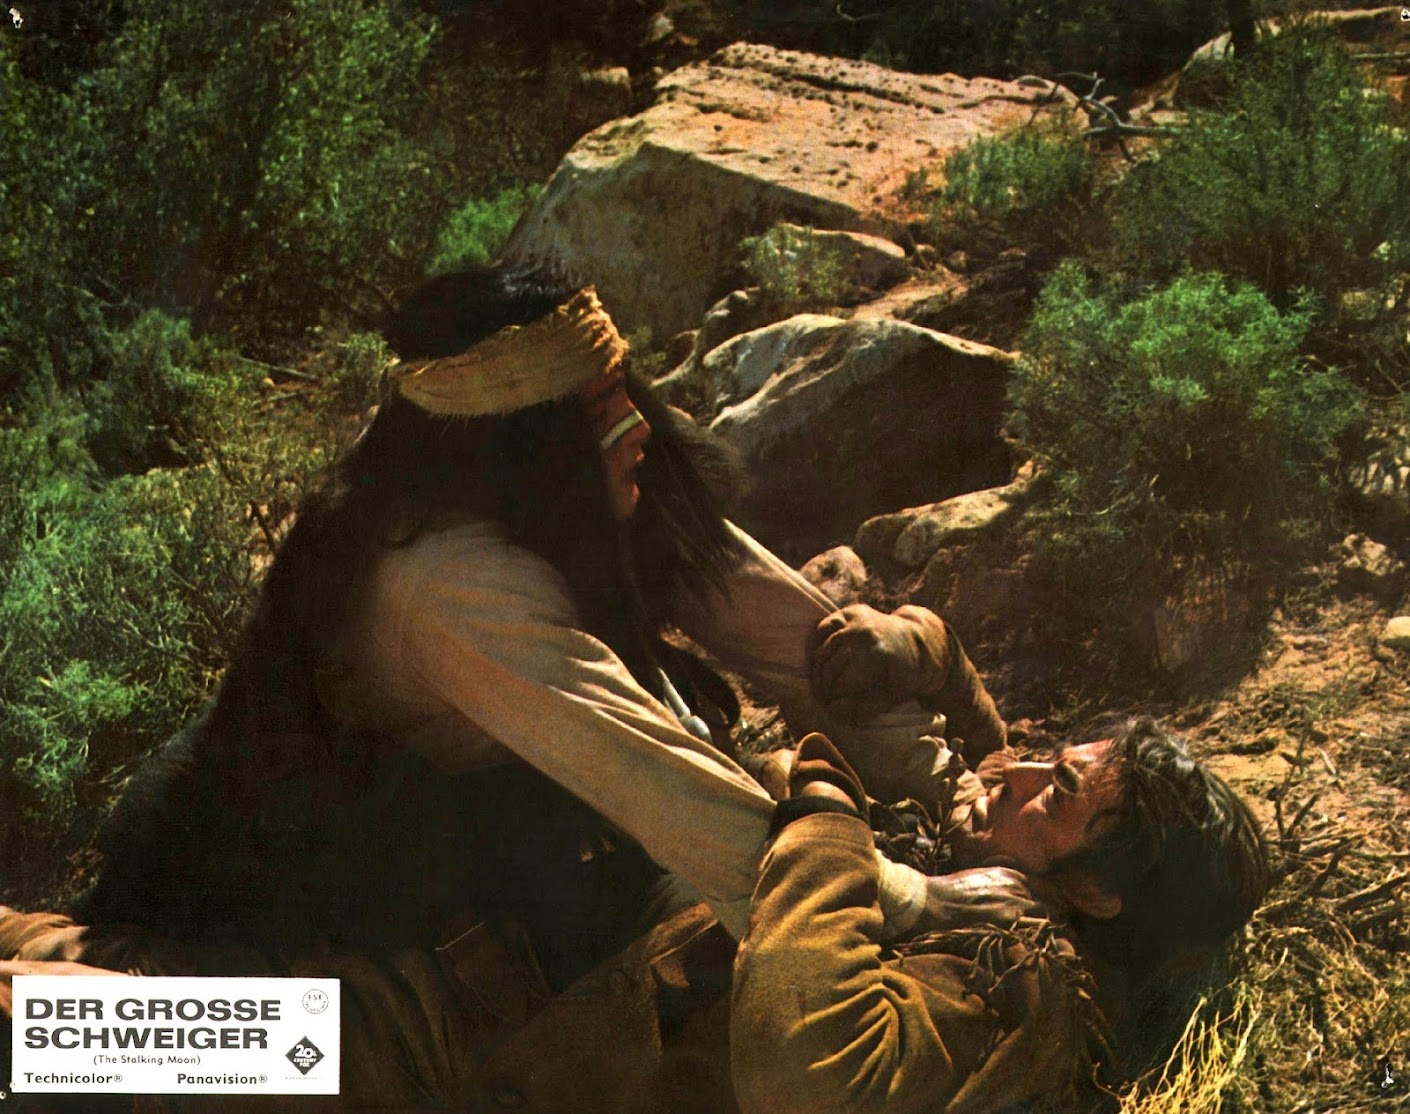 L'homme sauvage (1968) Robert Mulligan - The stalking moon (09.01.1968 / 1968)